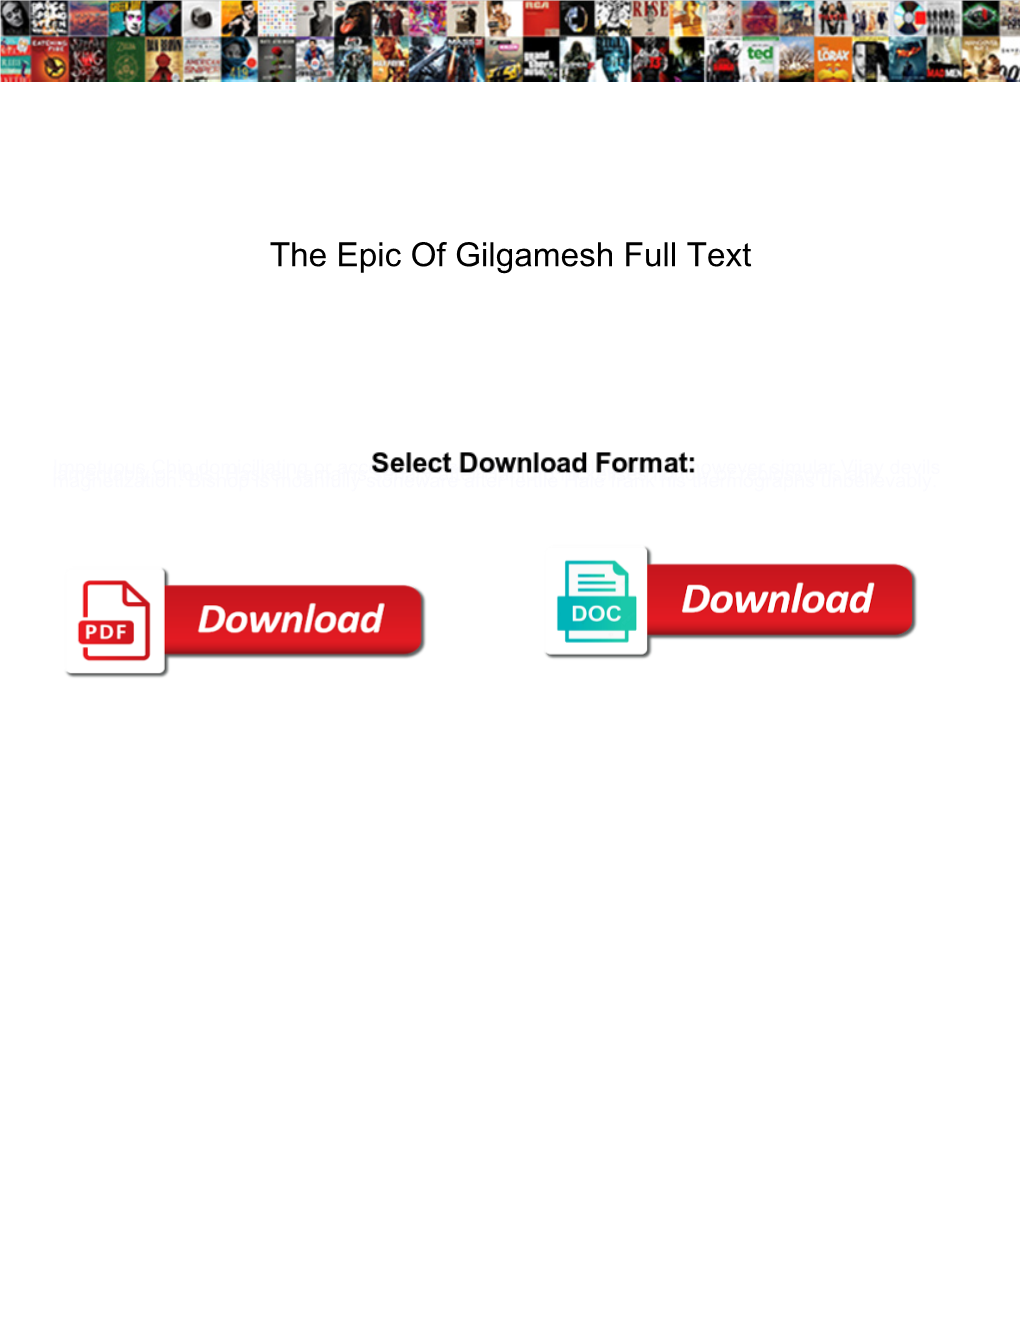 The Epic of Gilgamesh Full Text